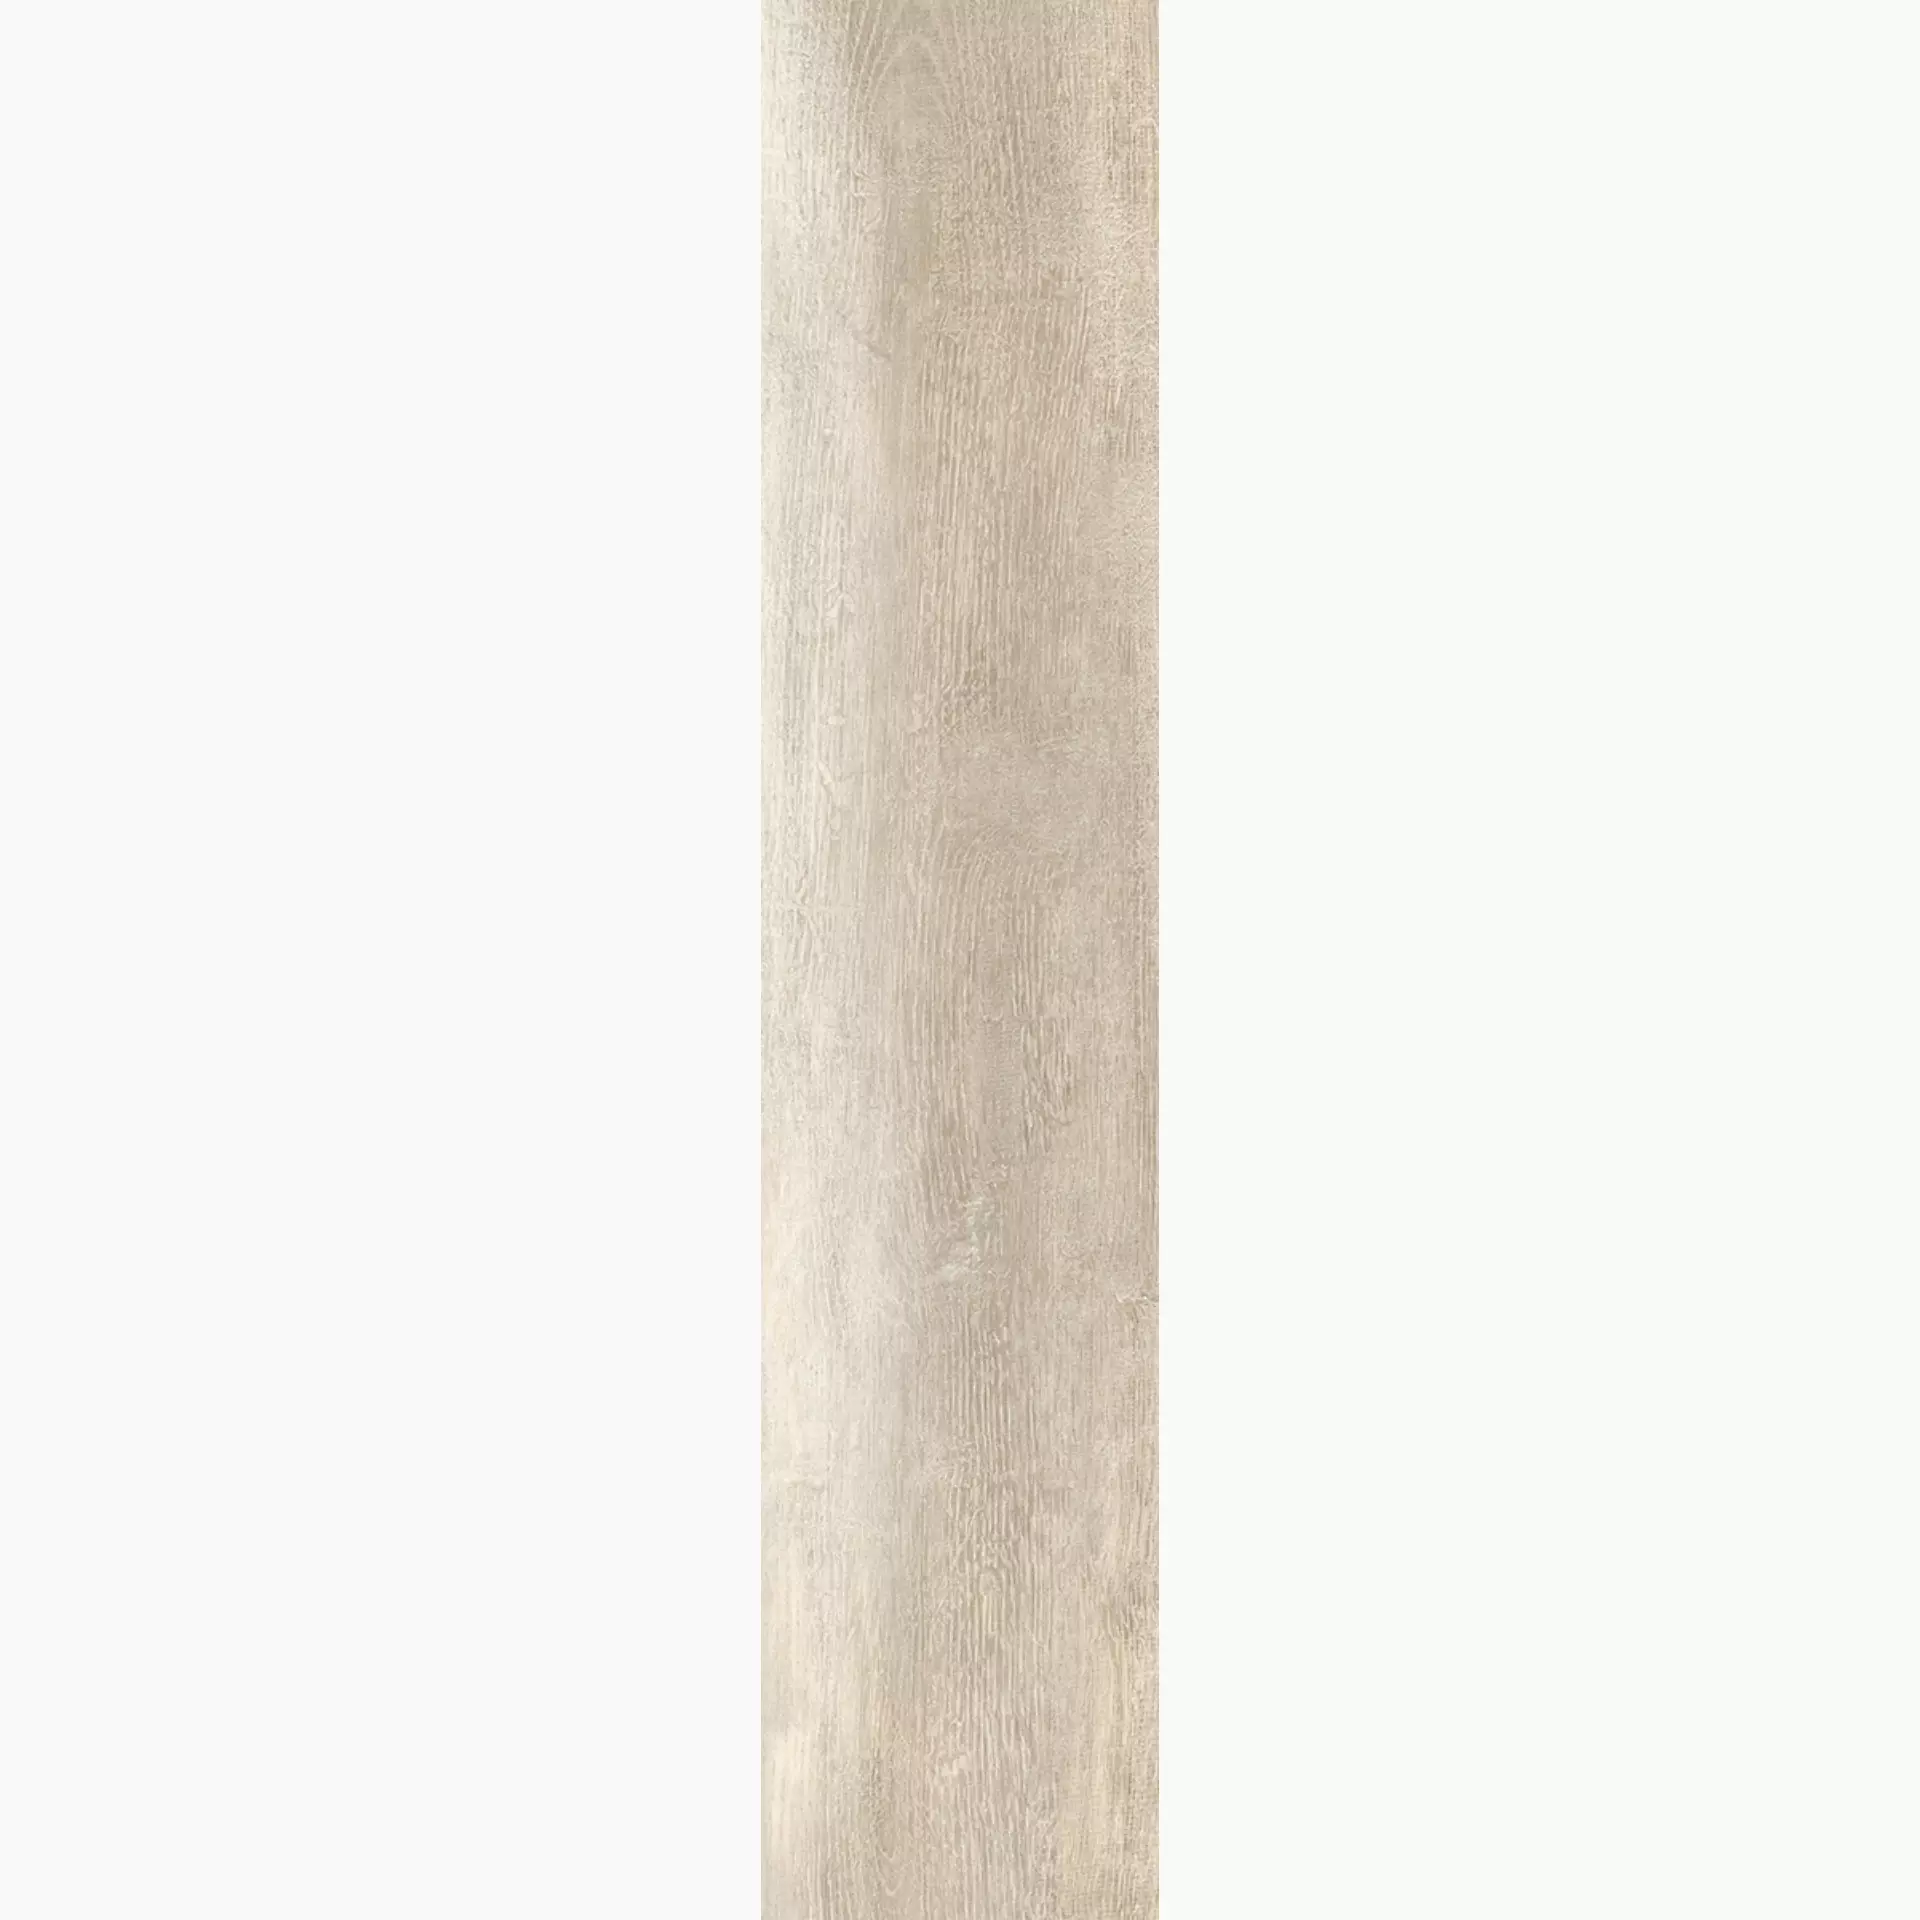 Rondine Greenwood Beige Naturale J86326 24x120cm 9,5mm